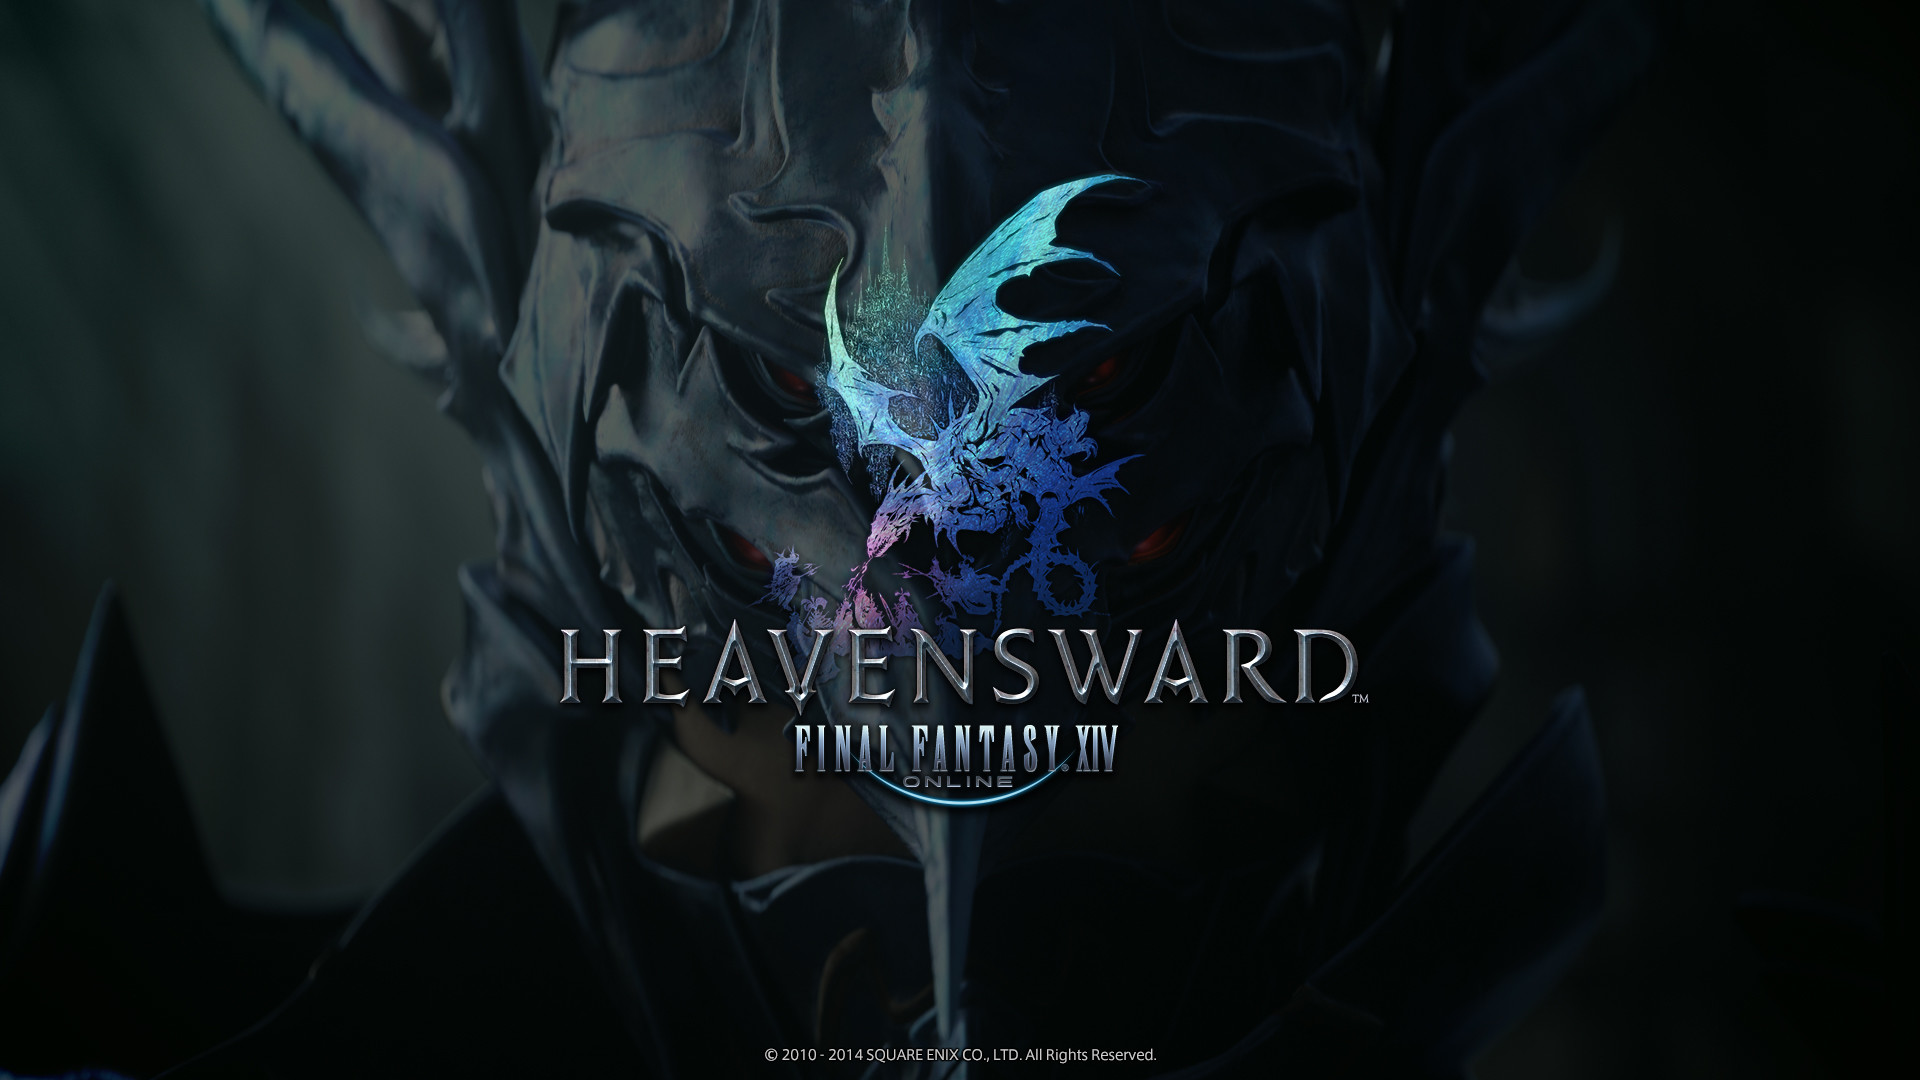 22 Dec Final Fantasy XIV Heavensward Expansion Adds 2 New Jobs